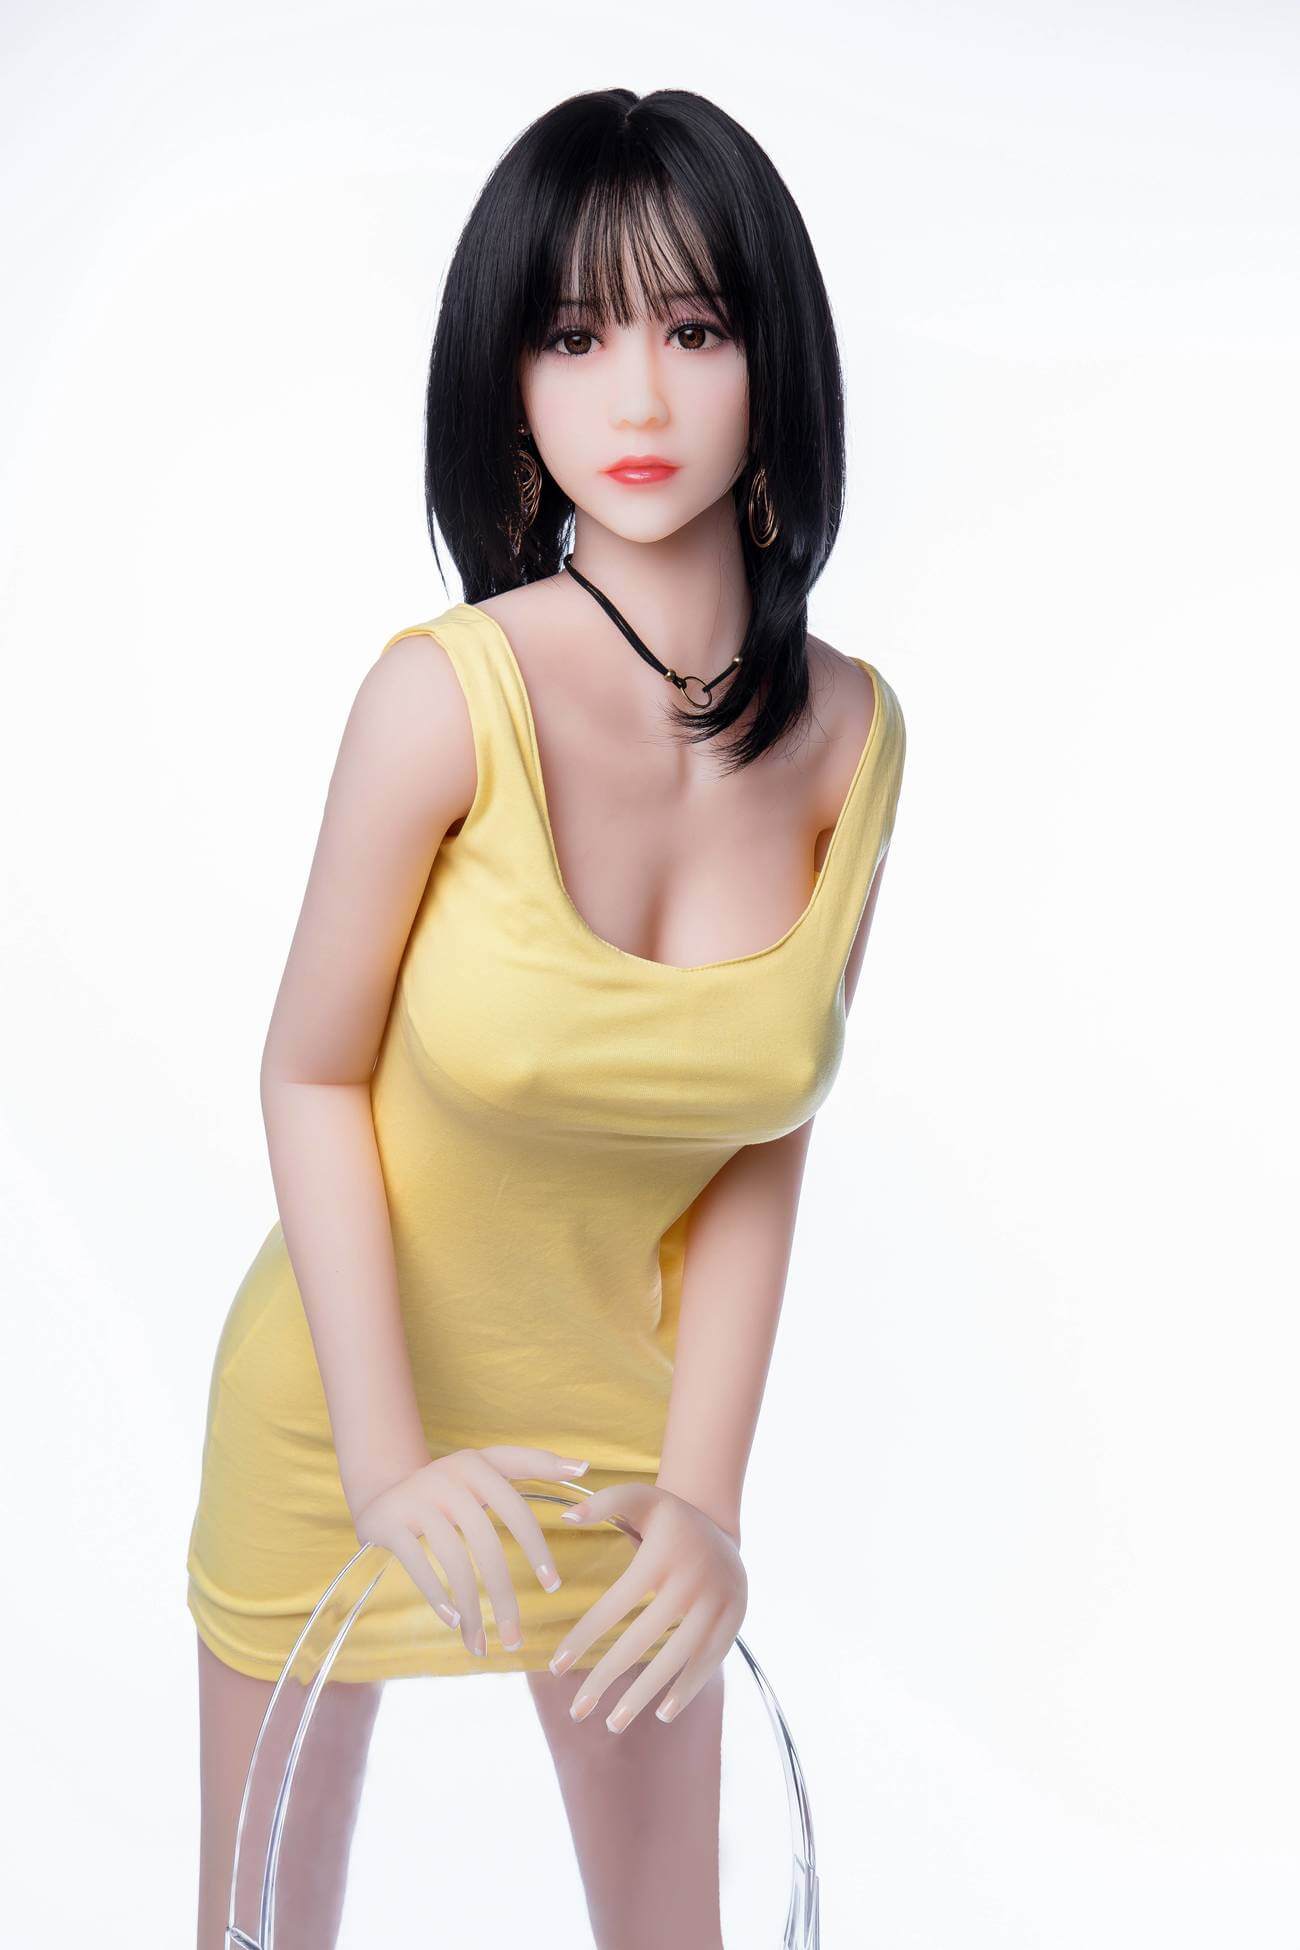 Japanese Life Size Sex Dolls   Lee 2